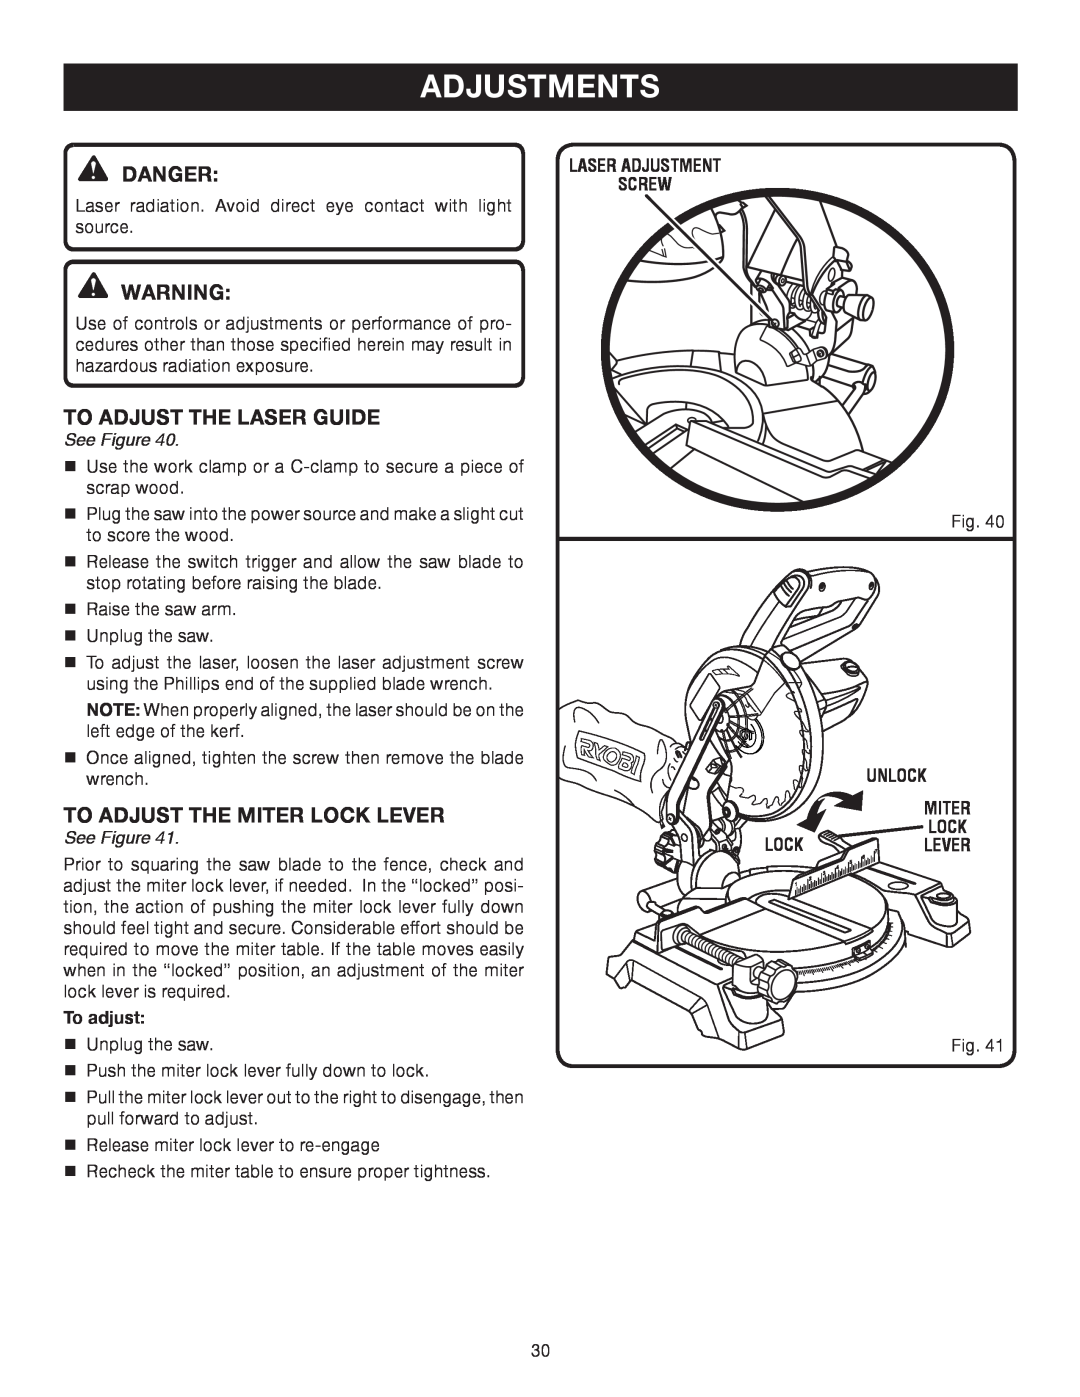 Ryobi TS1141 manual Adjustments, Danger, To Adjust The Laser Guide, To adjust the miter lock lever, See Figure 